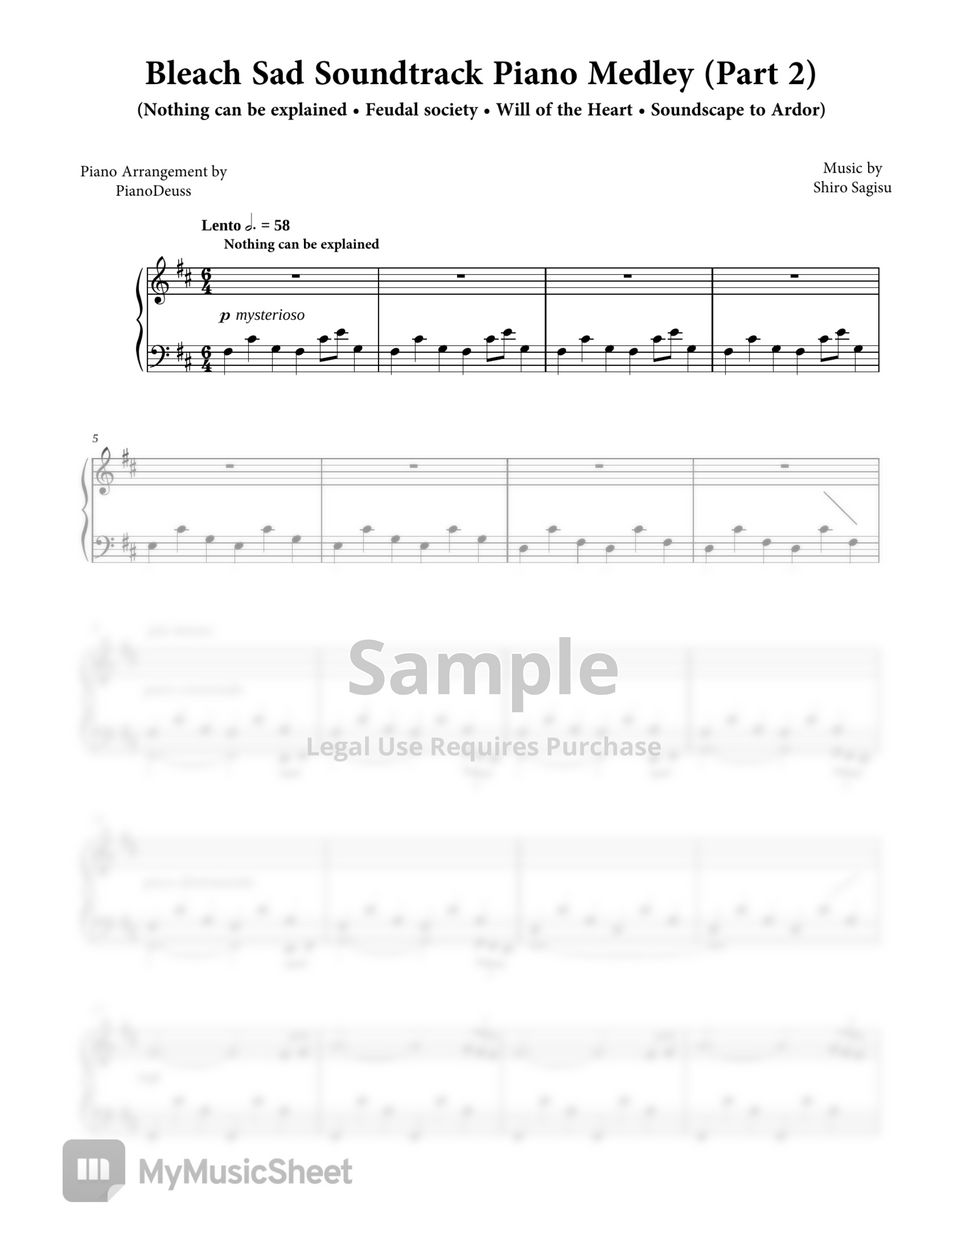 Shiro Sagisu - Bleach Sad Soundtrack Piano Medley (Part 2) by PianoDeuss